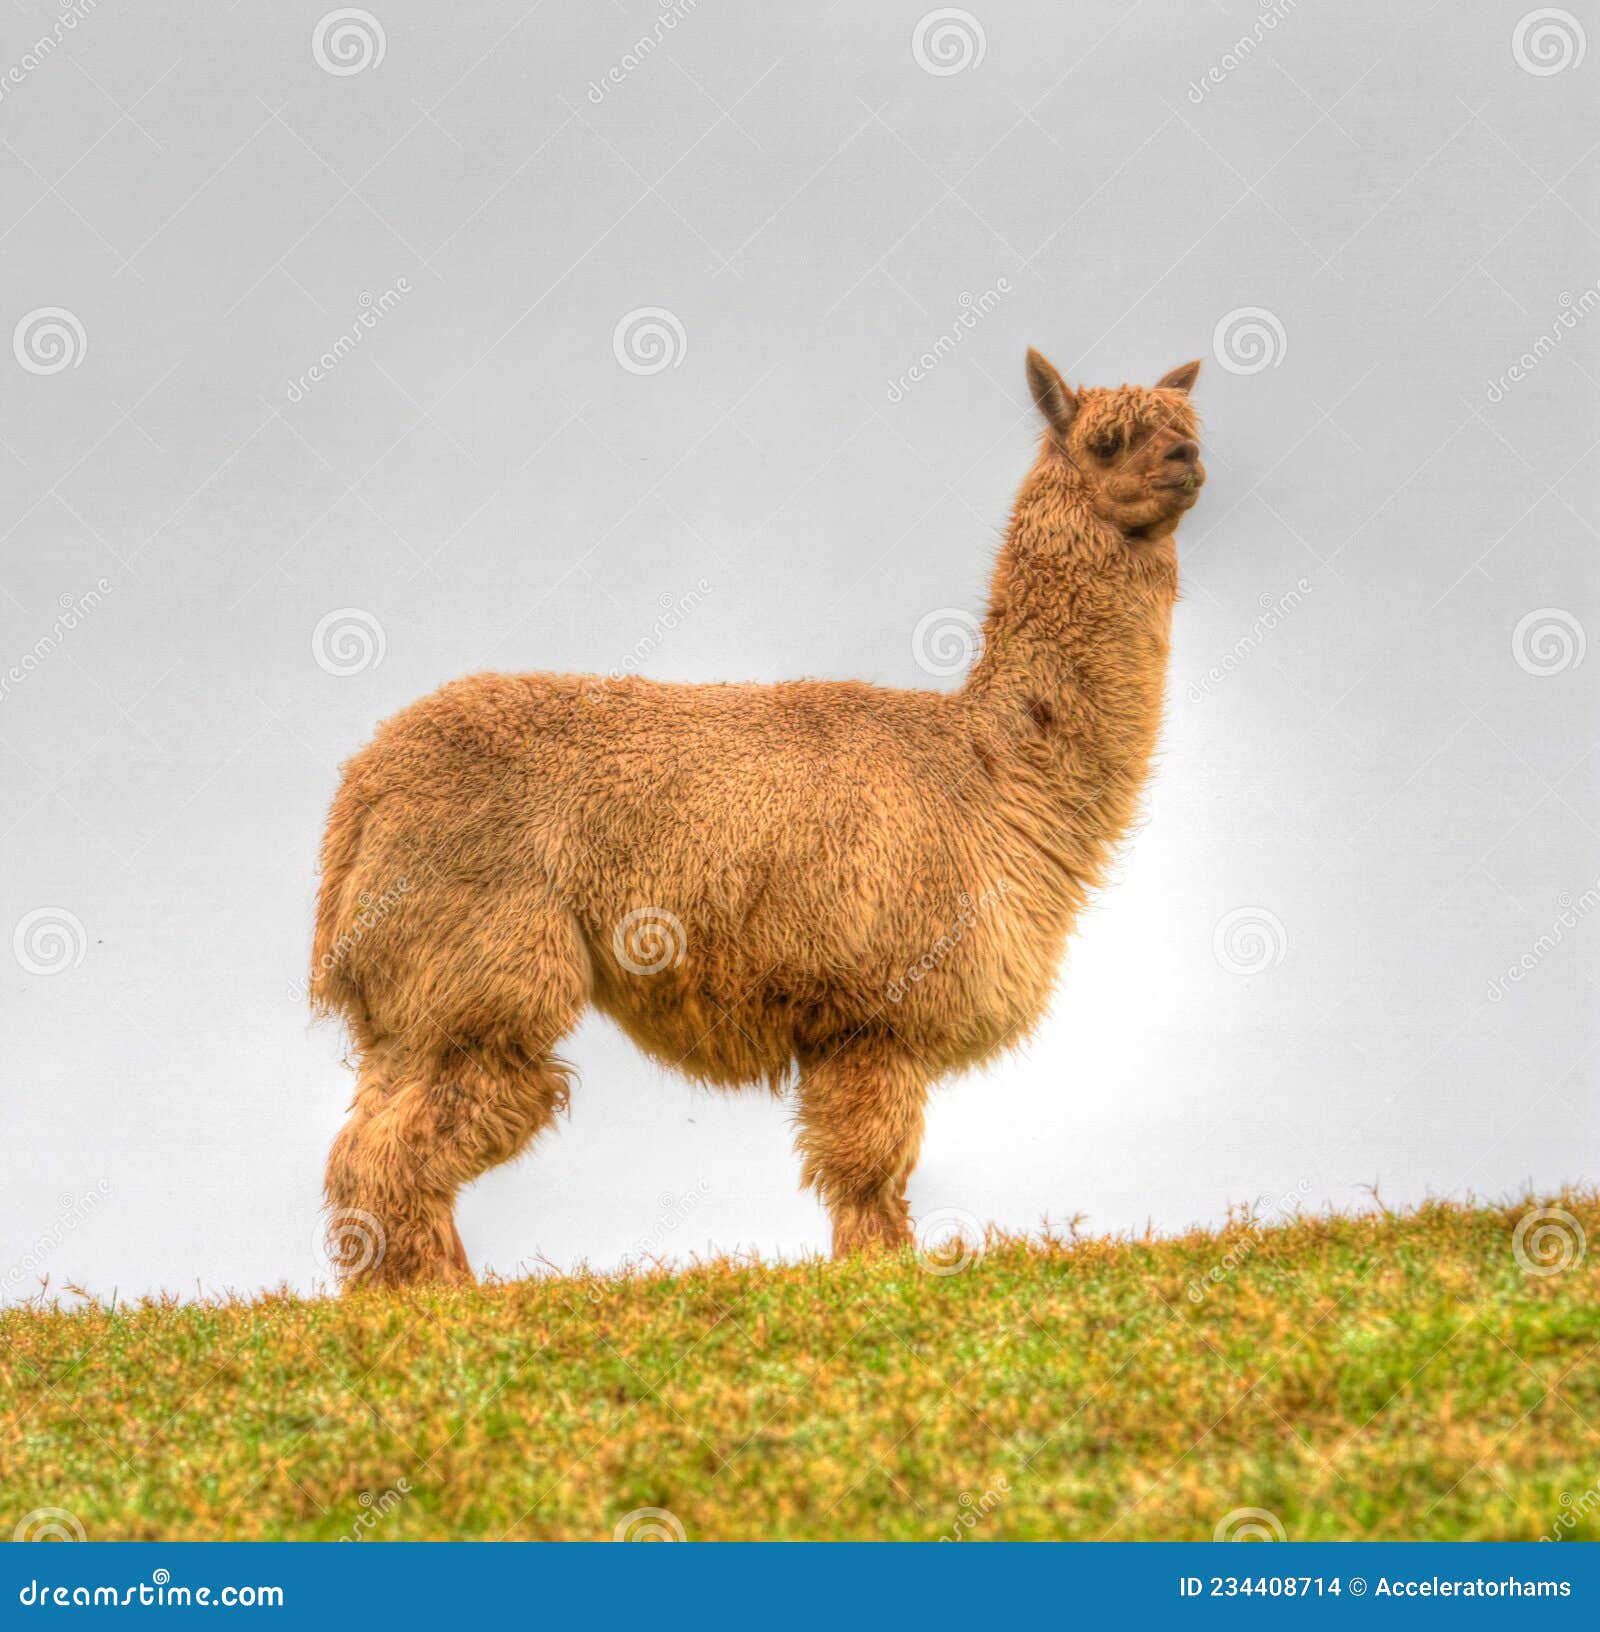 alpaca hairy brown coat ligtht background